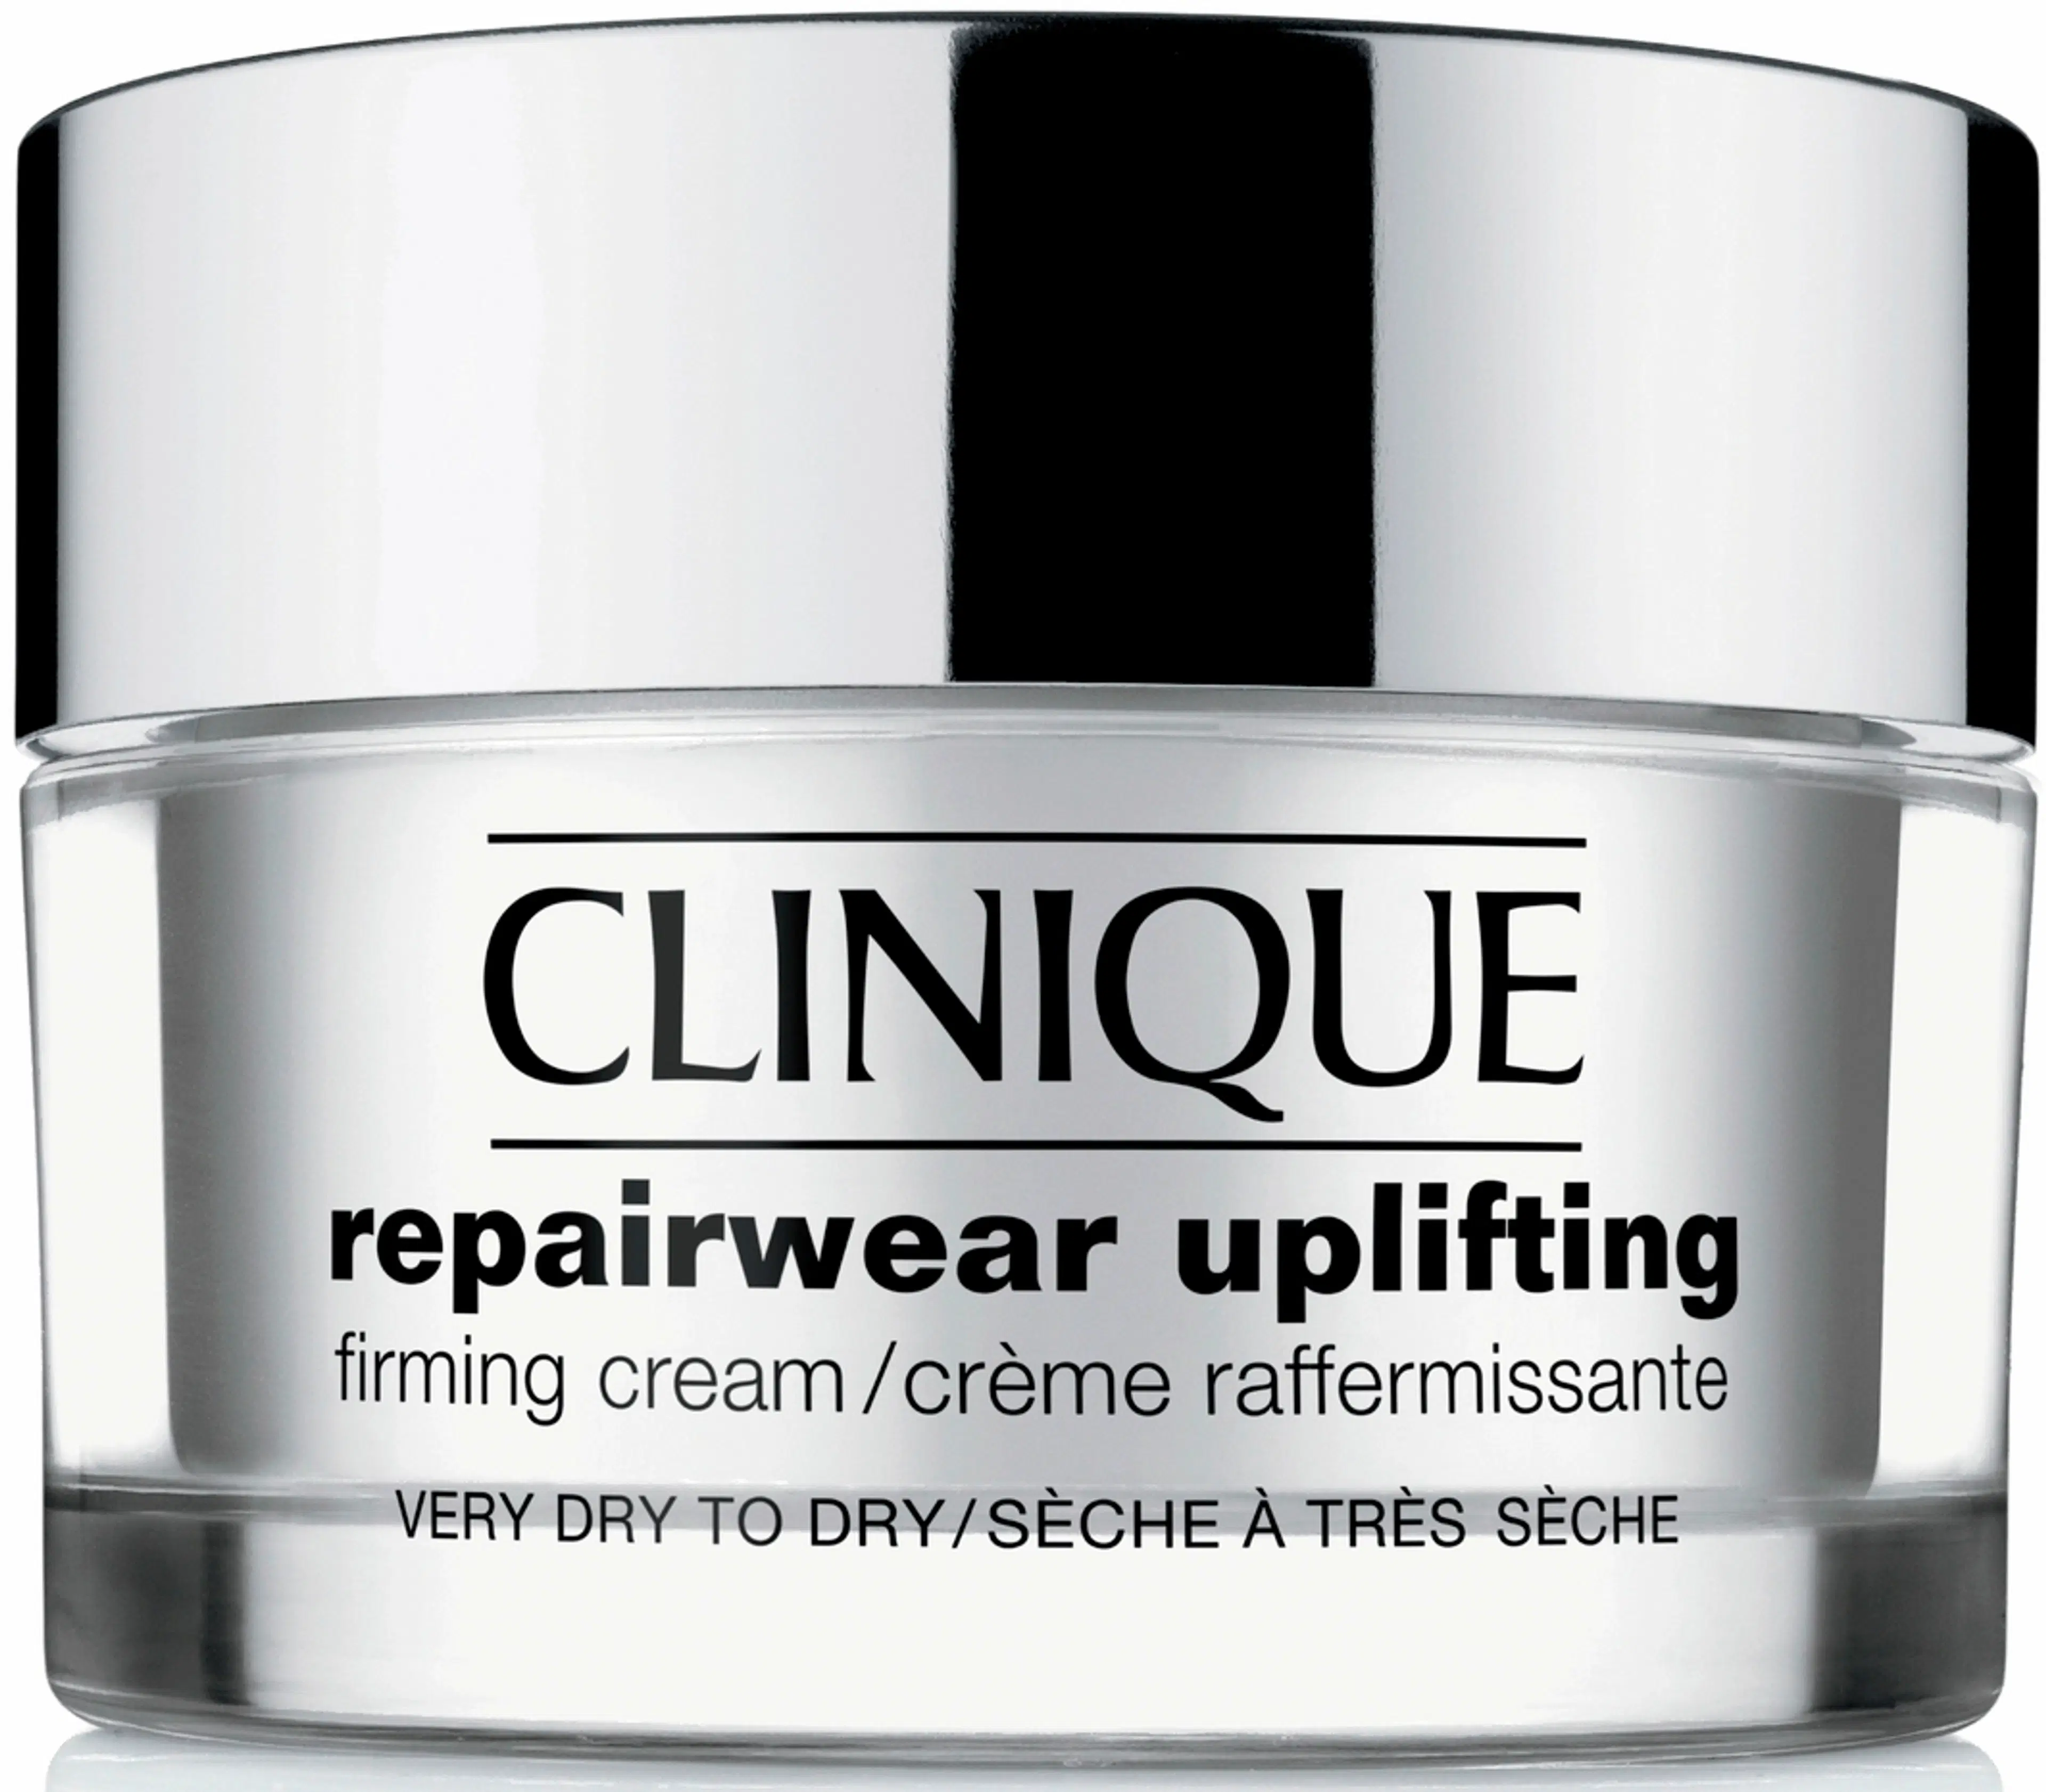 Clinique Repairwear Uplifting Firming Cream päivävoide 50 ml